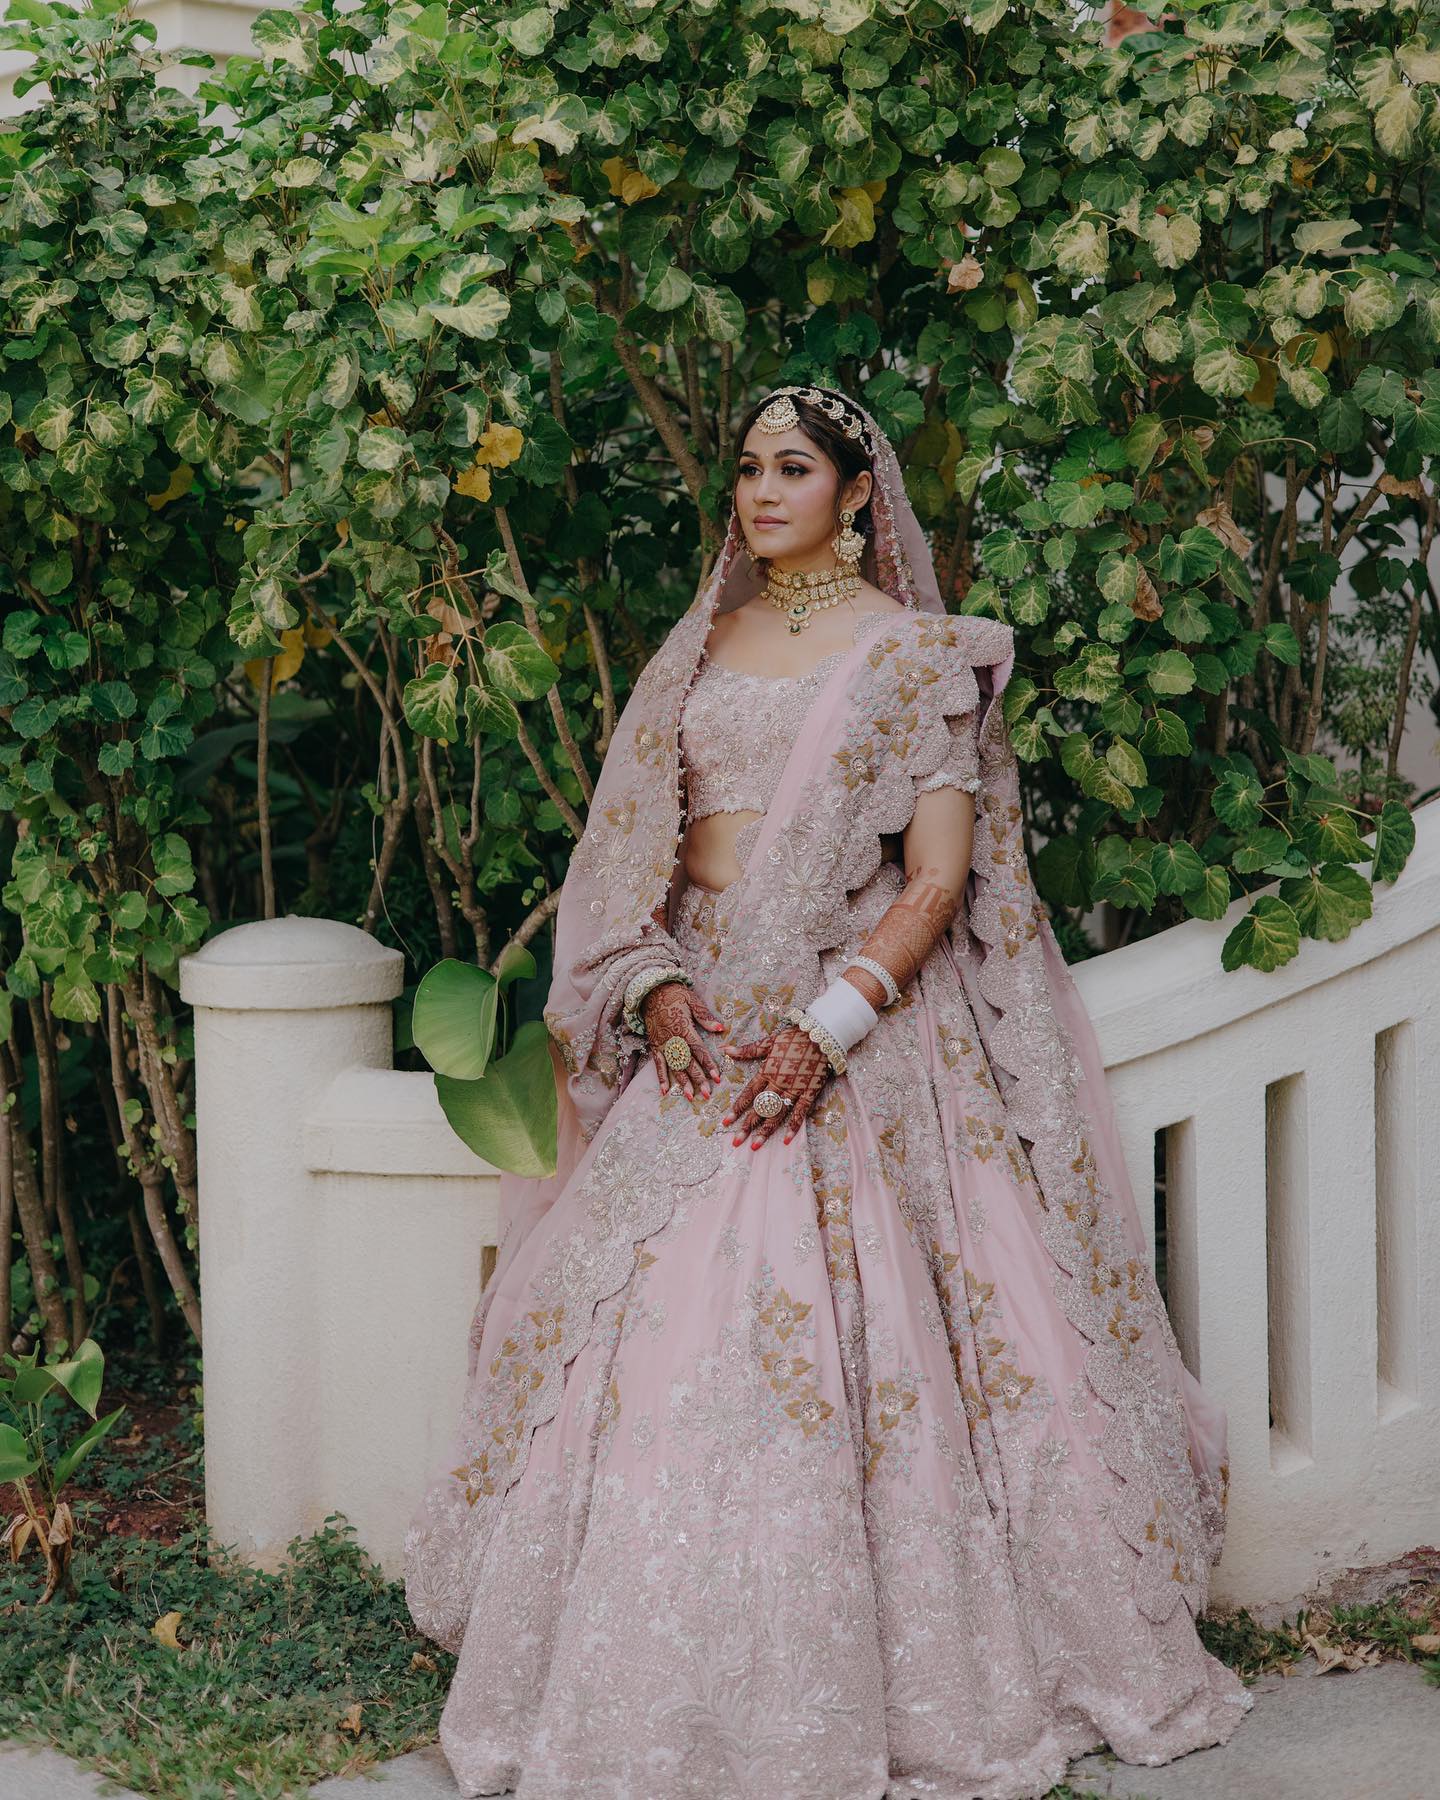 The Bride | Anamika Khanna